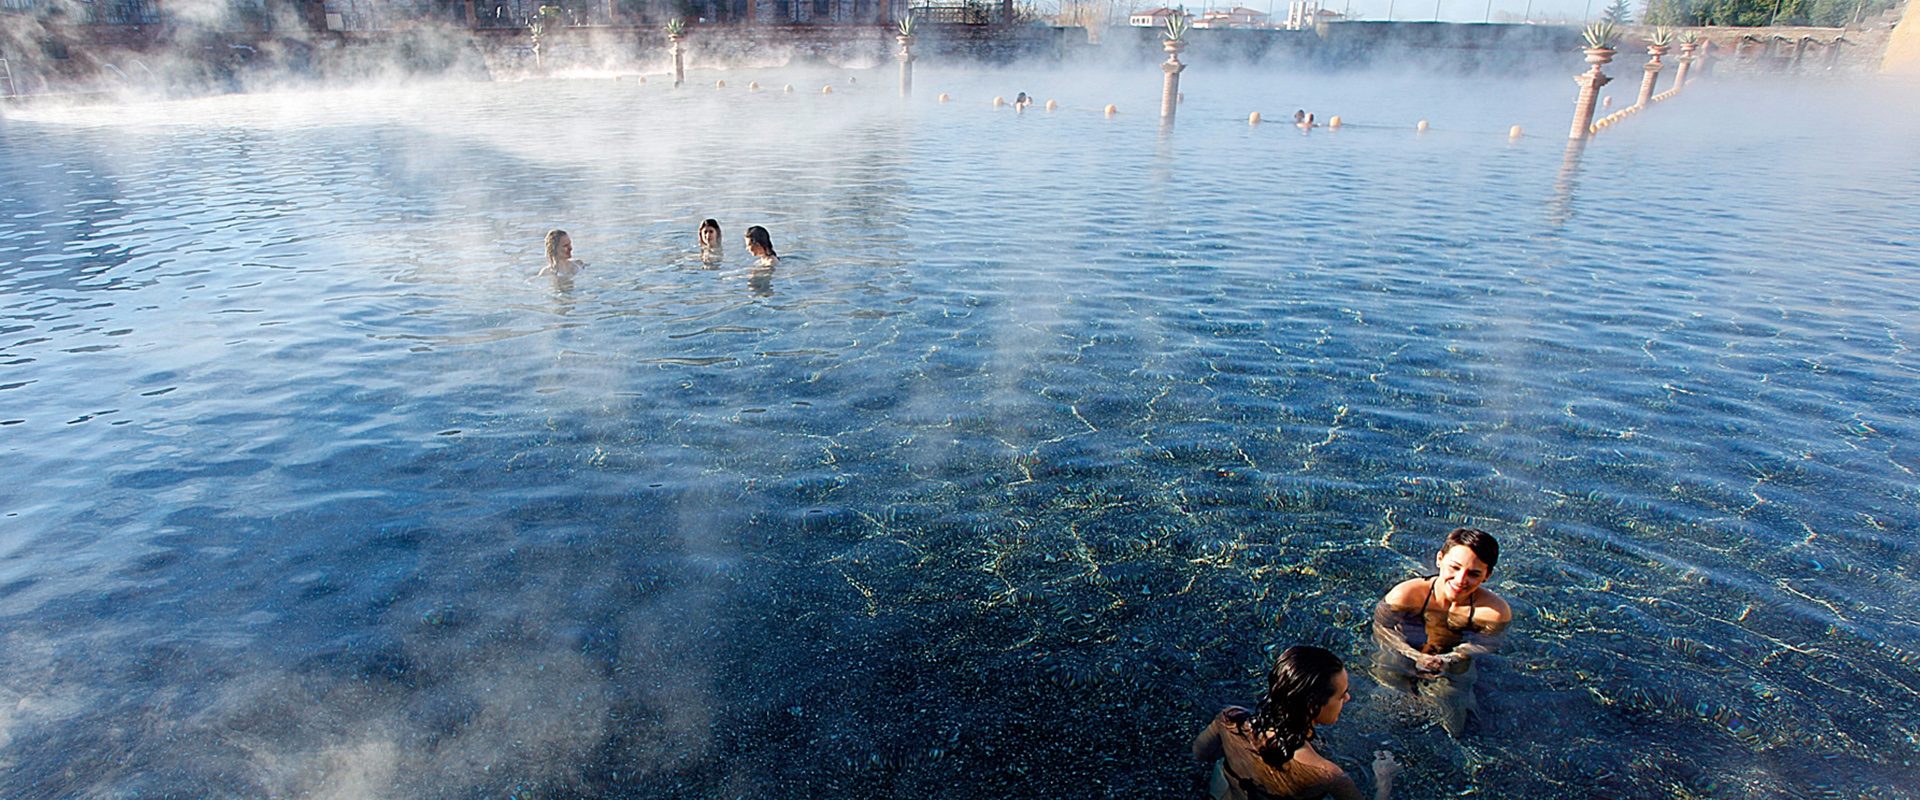 Calidario thermal baths